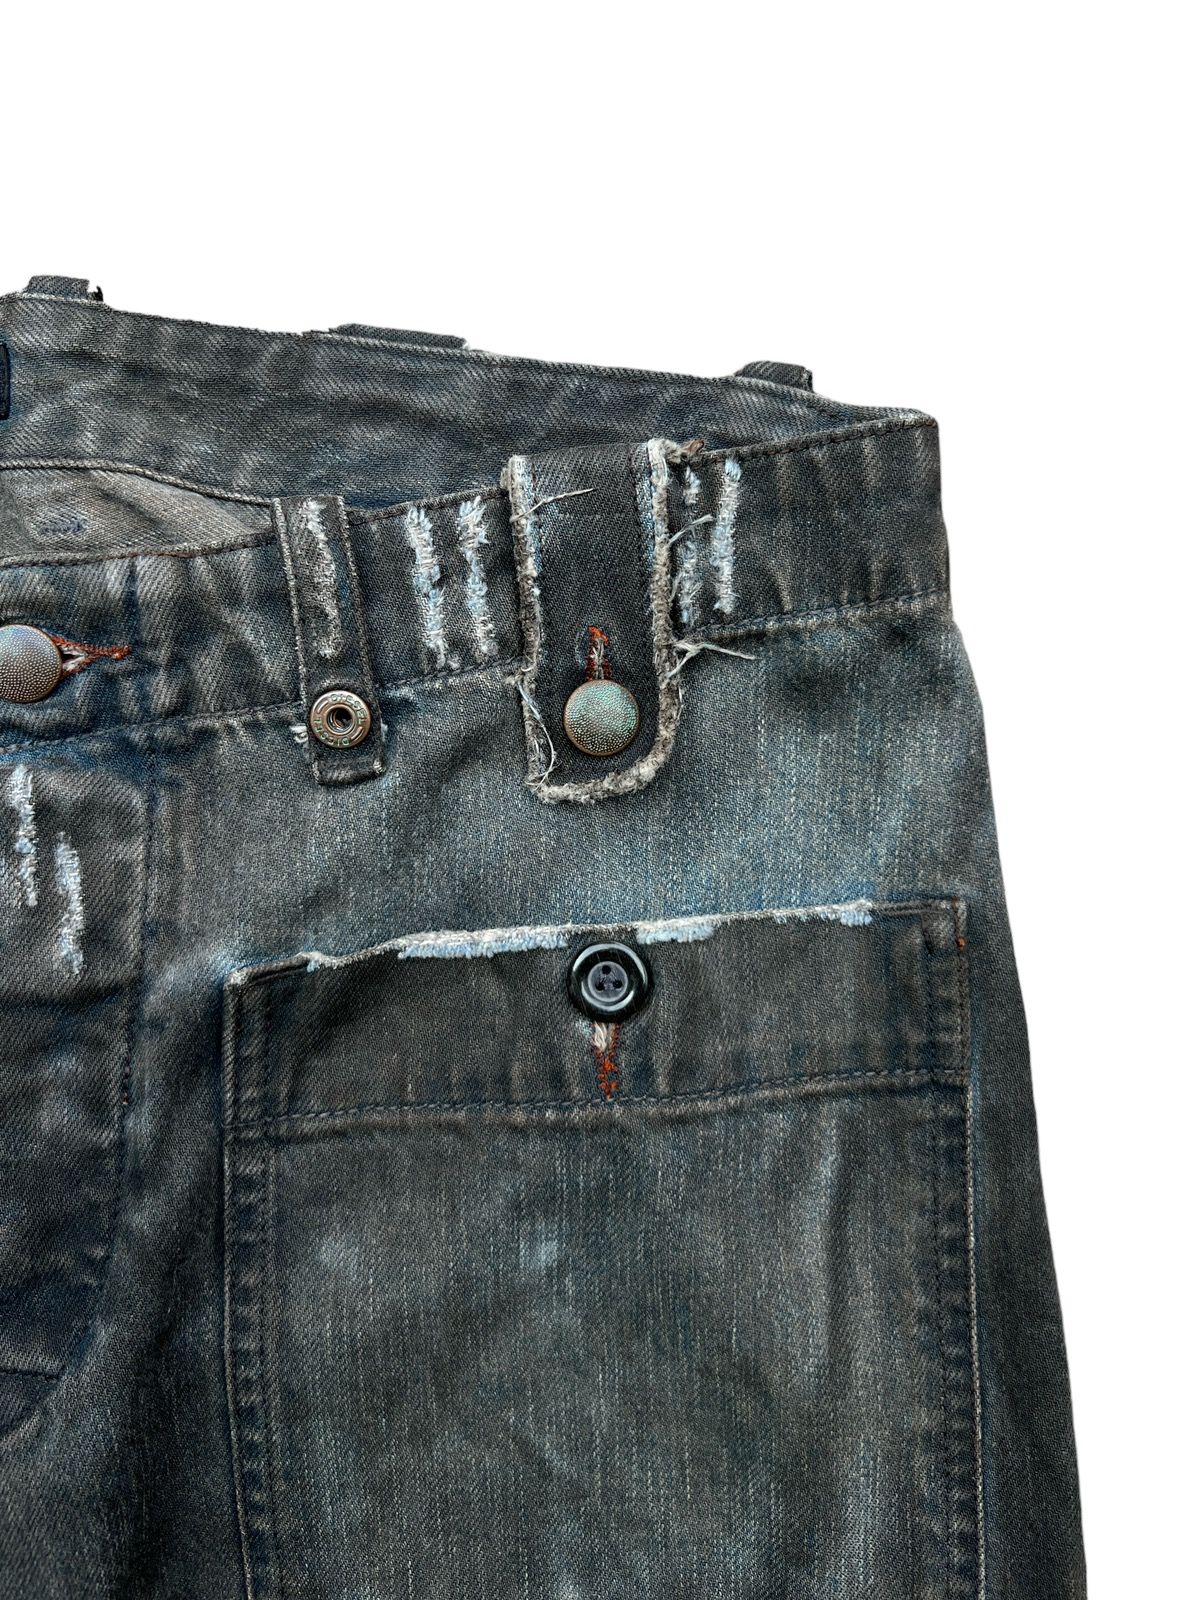 Rare🔥Diesel MultiPocket Distressed Baggy Bondage Jeans 34x34 - 8